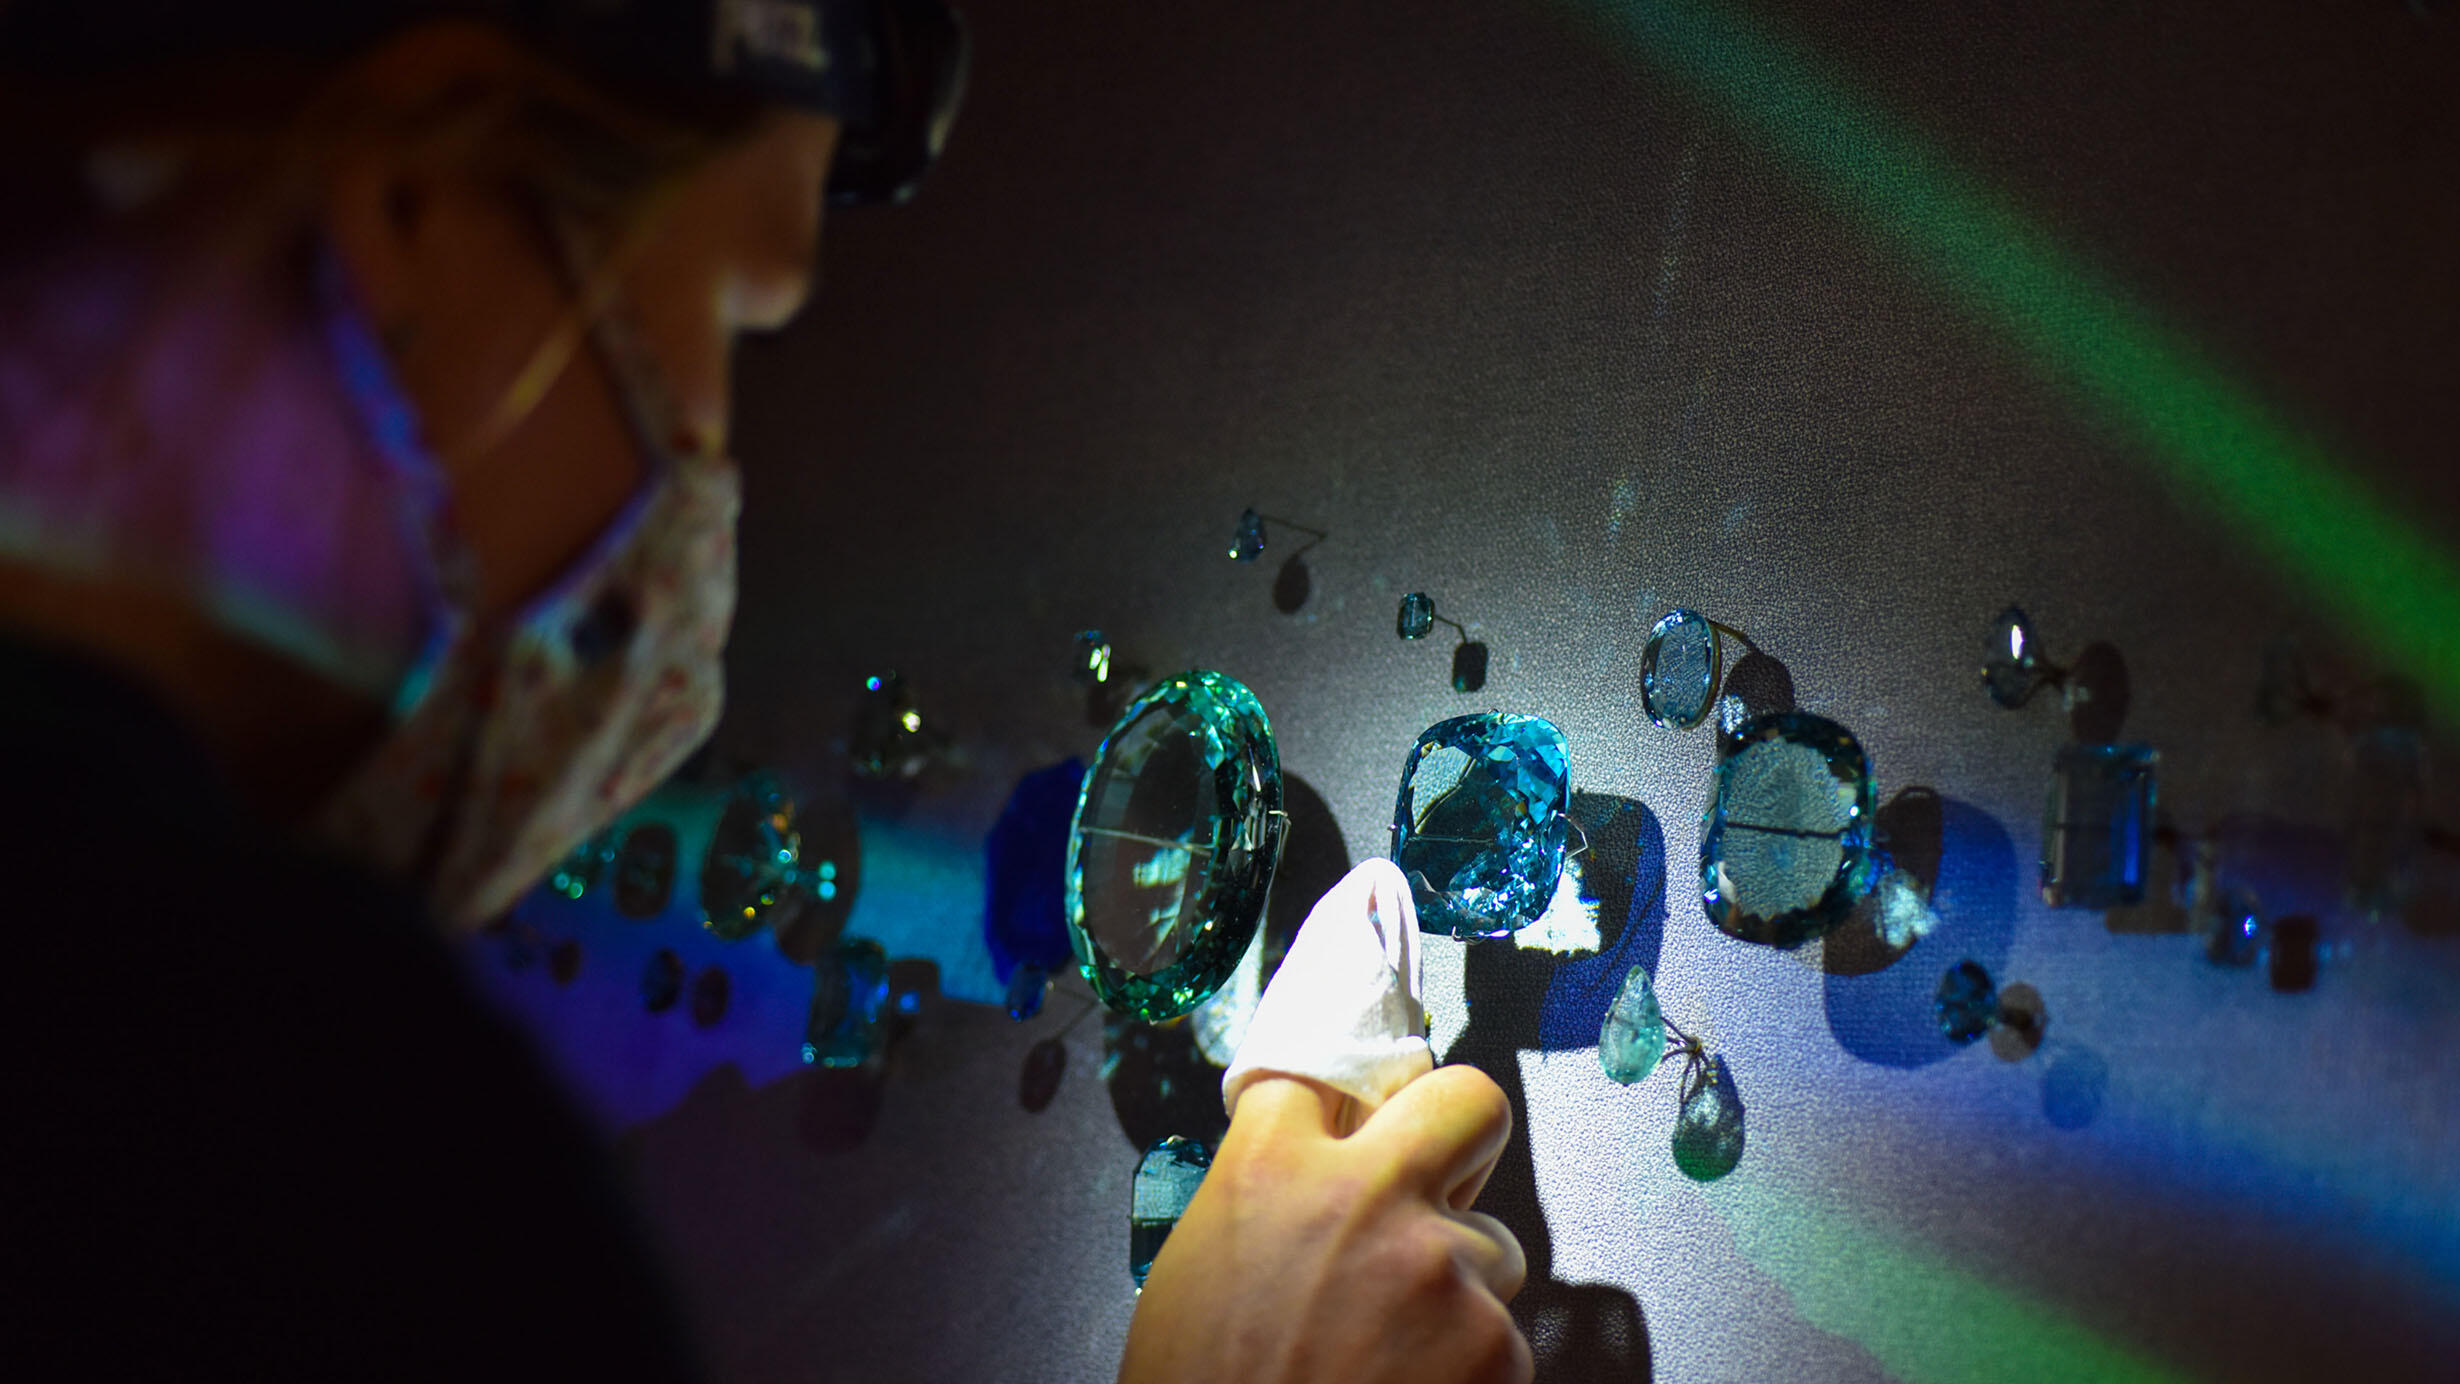 Exhibition staff member polishes gems.